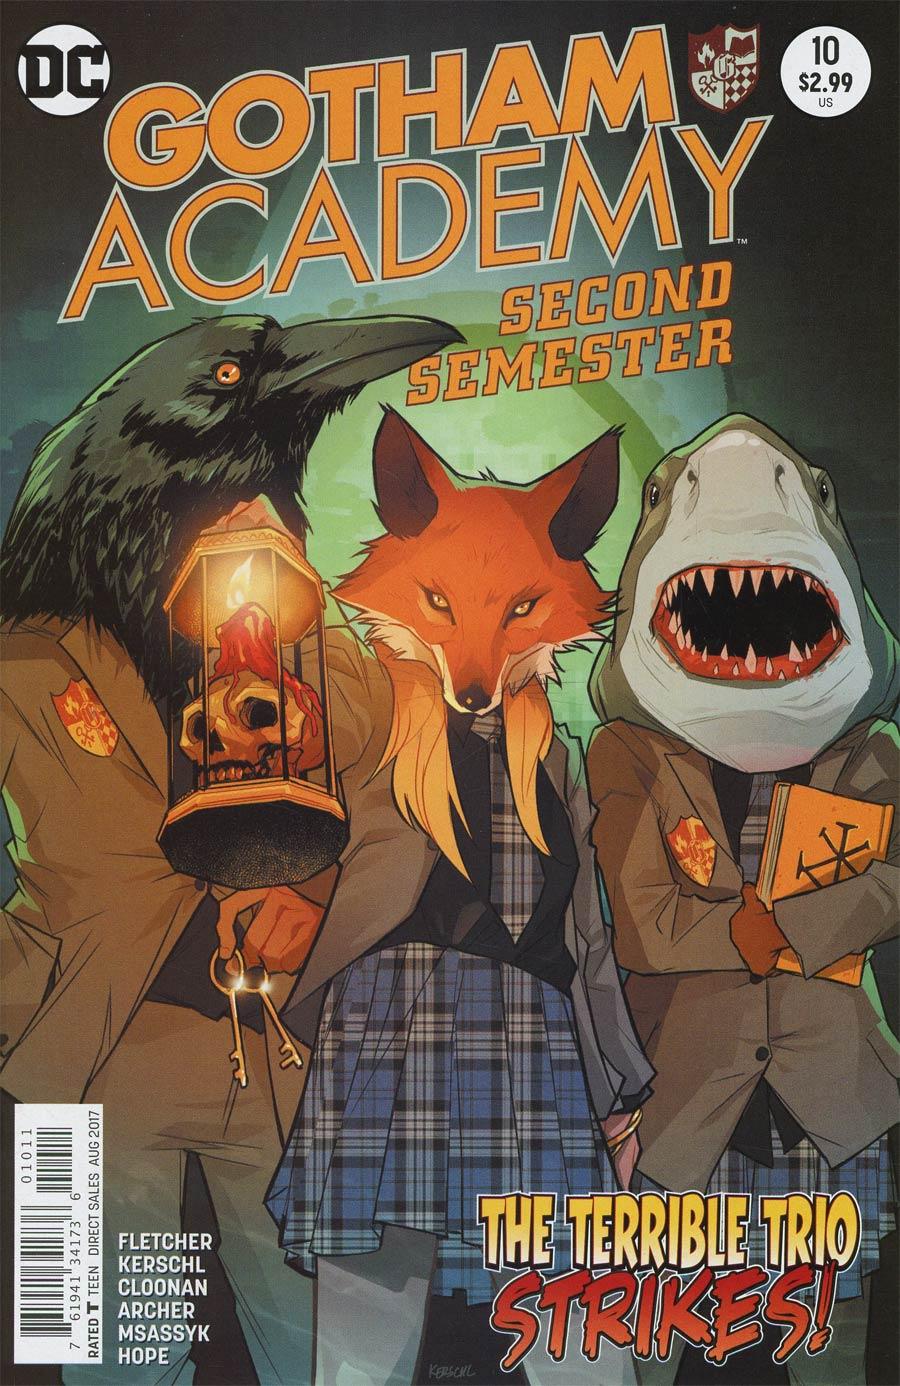 Gotham Academy Second Semester Vol. 1 #10